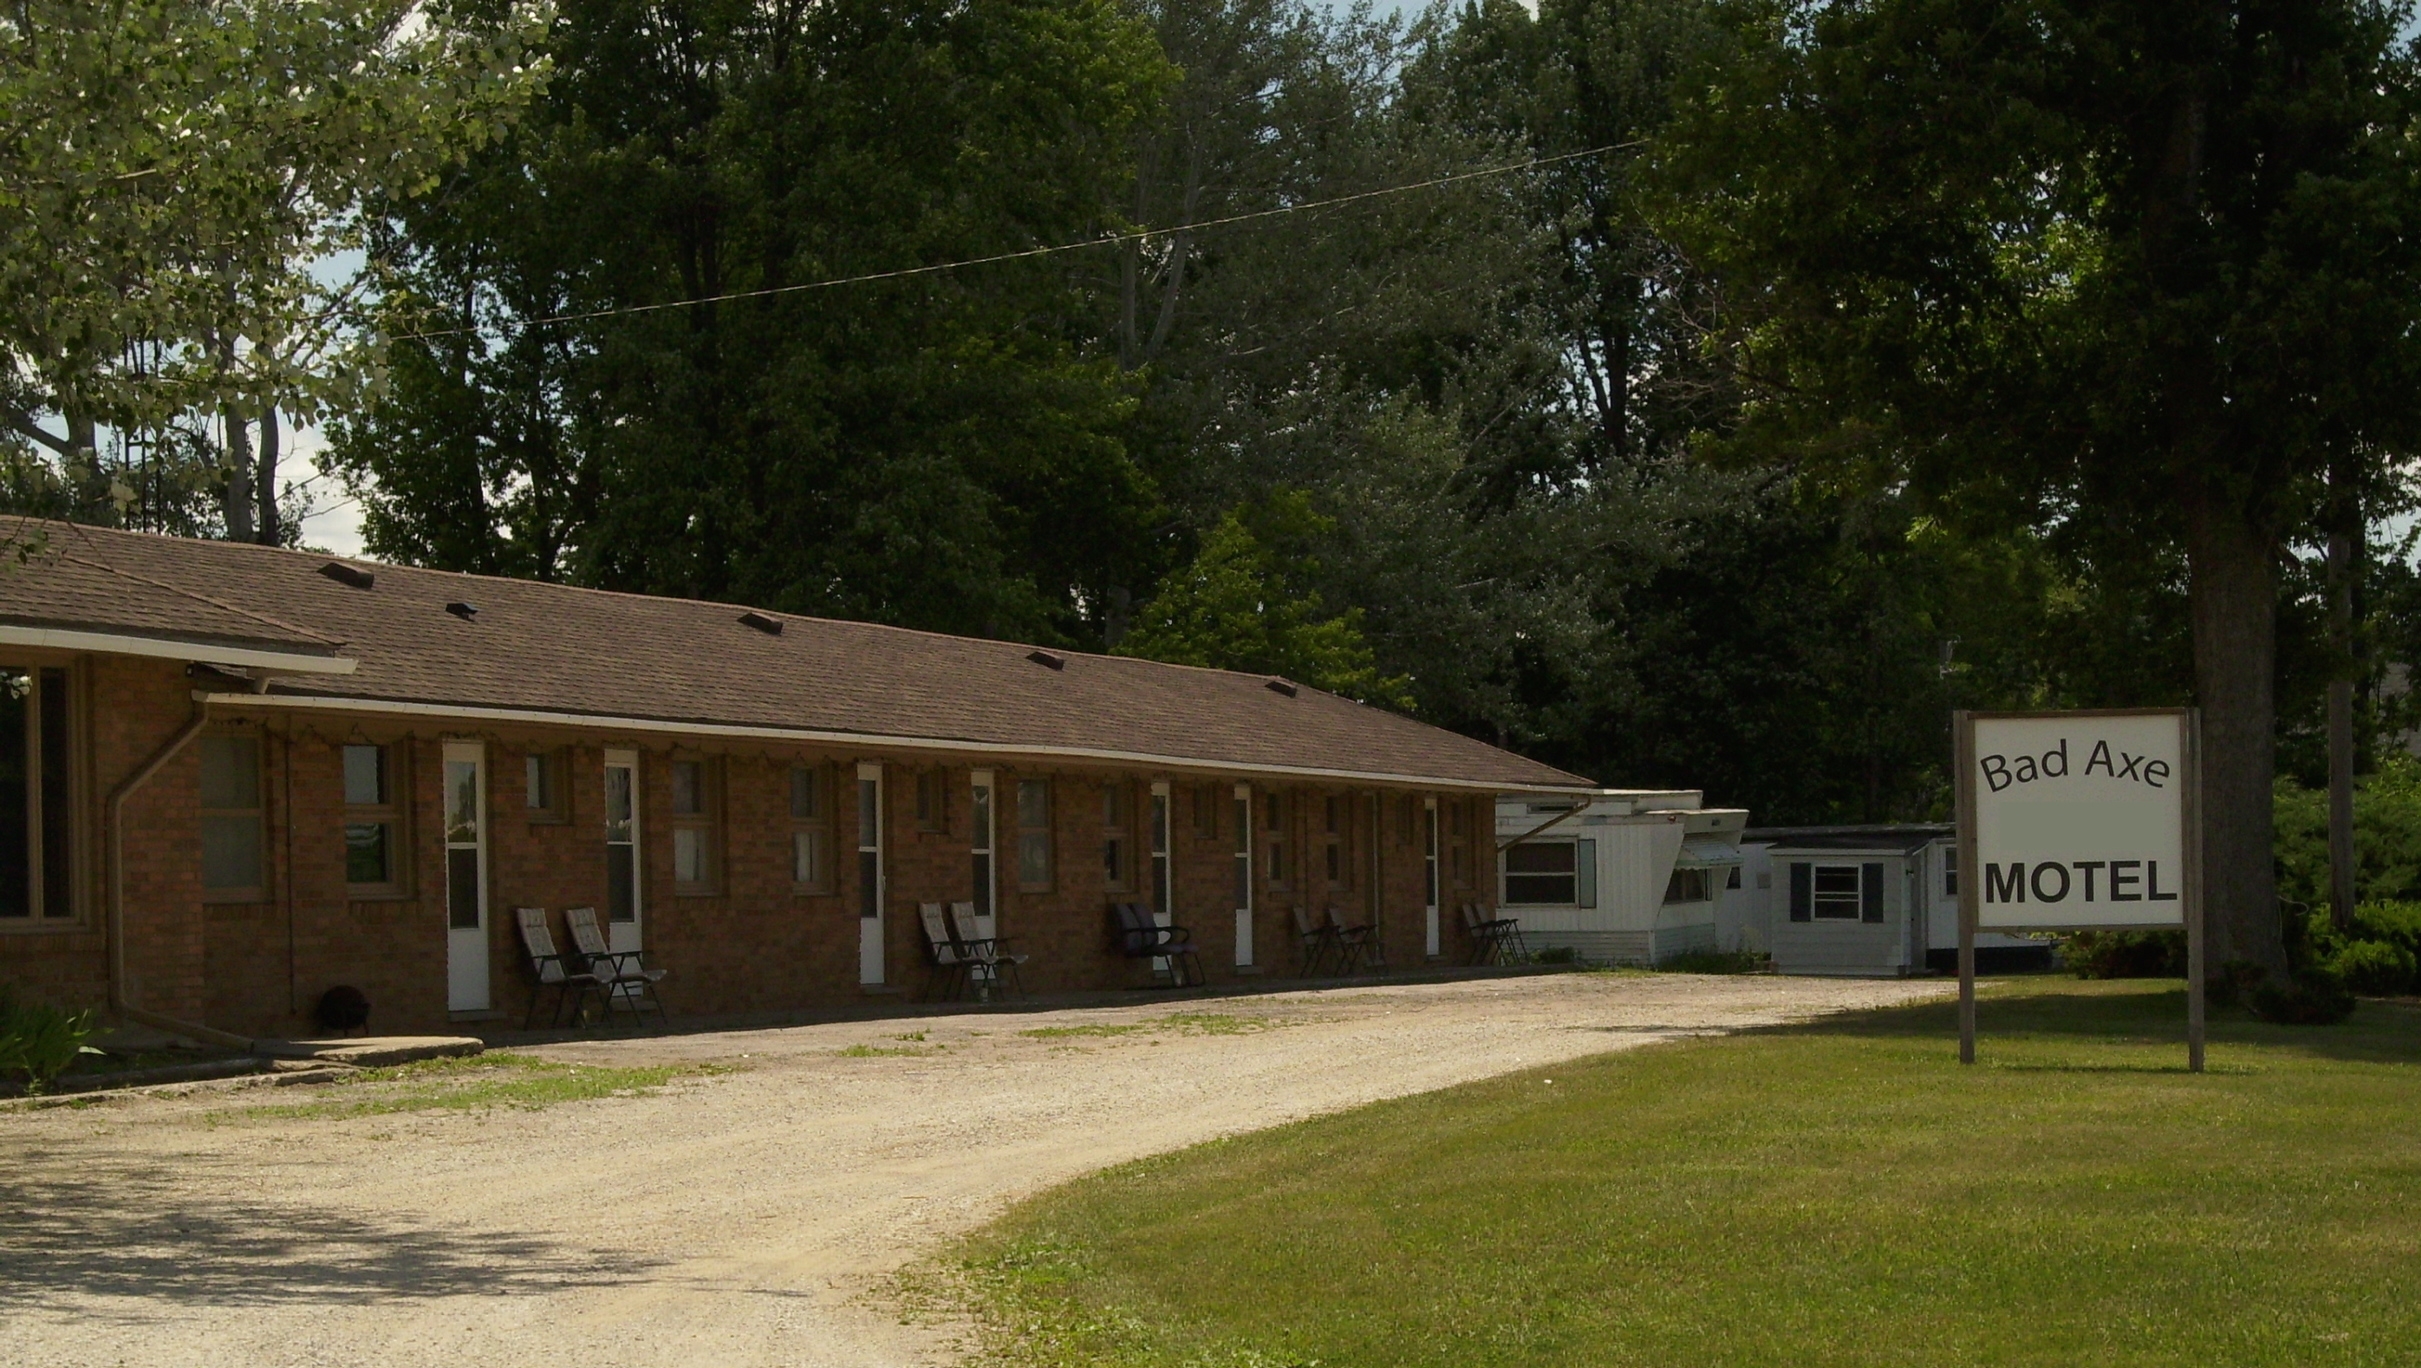 Exterior of Motel